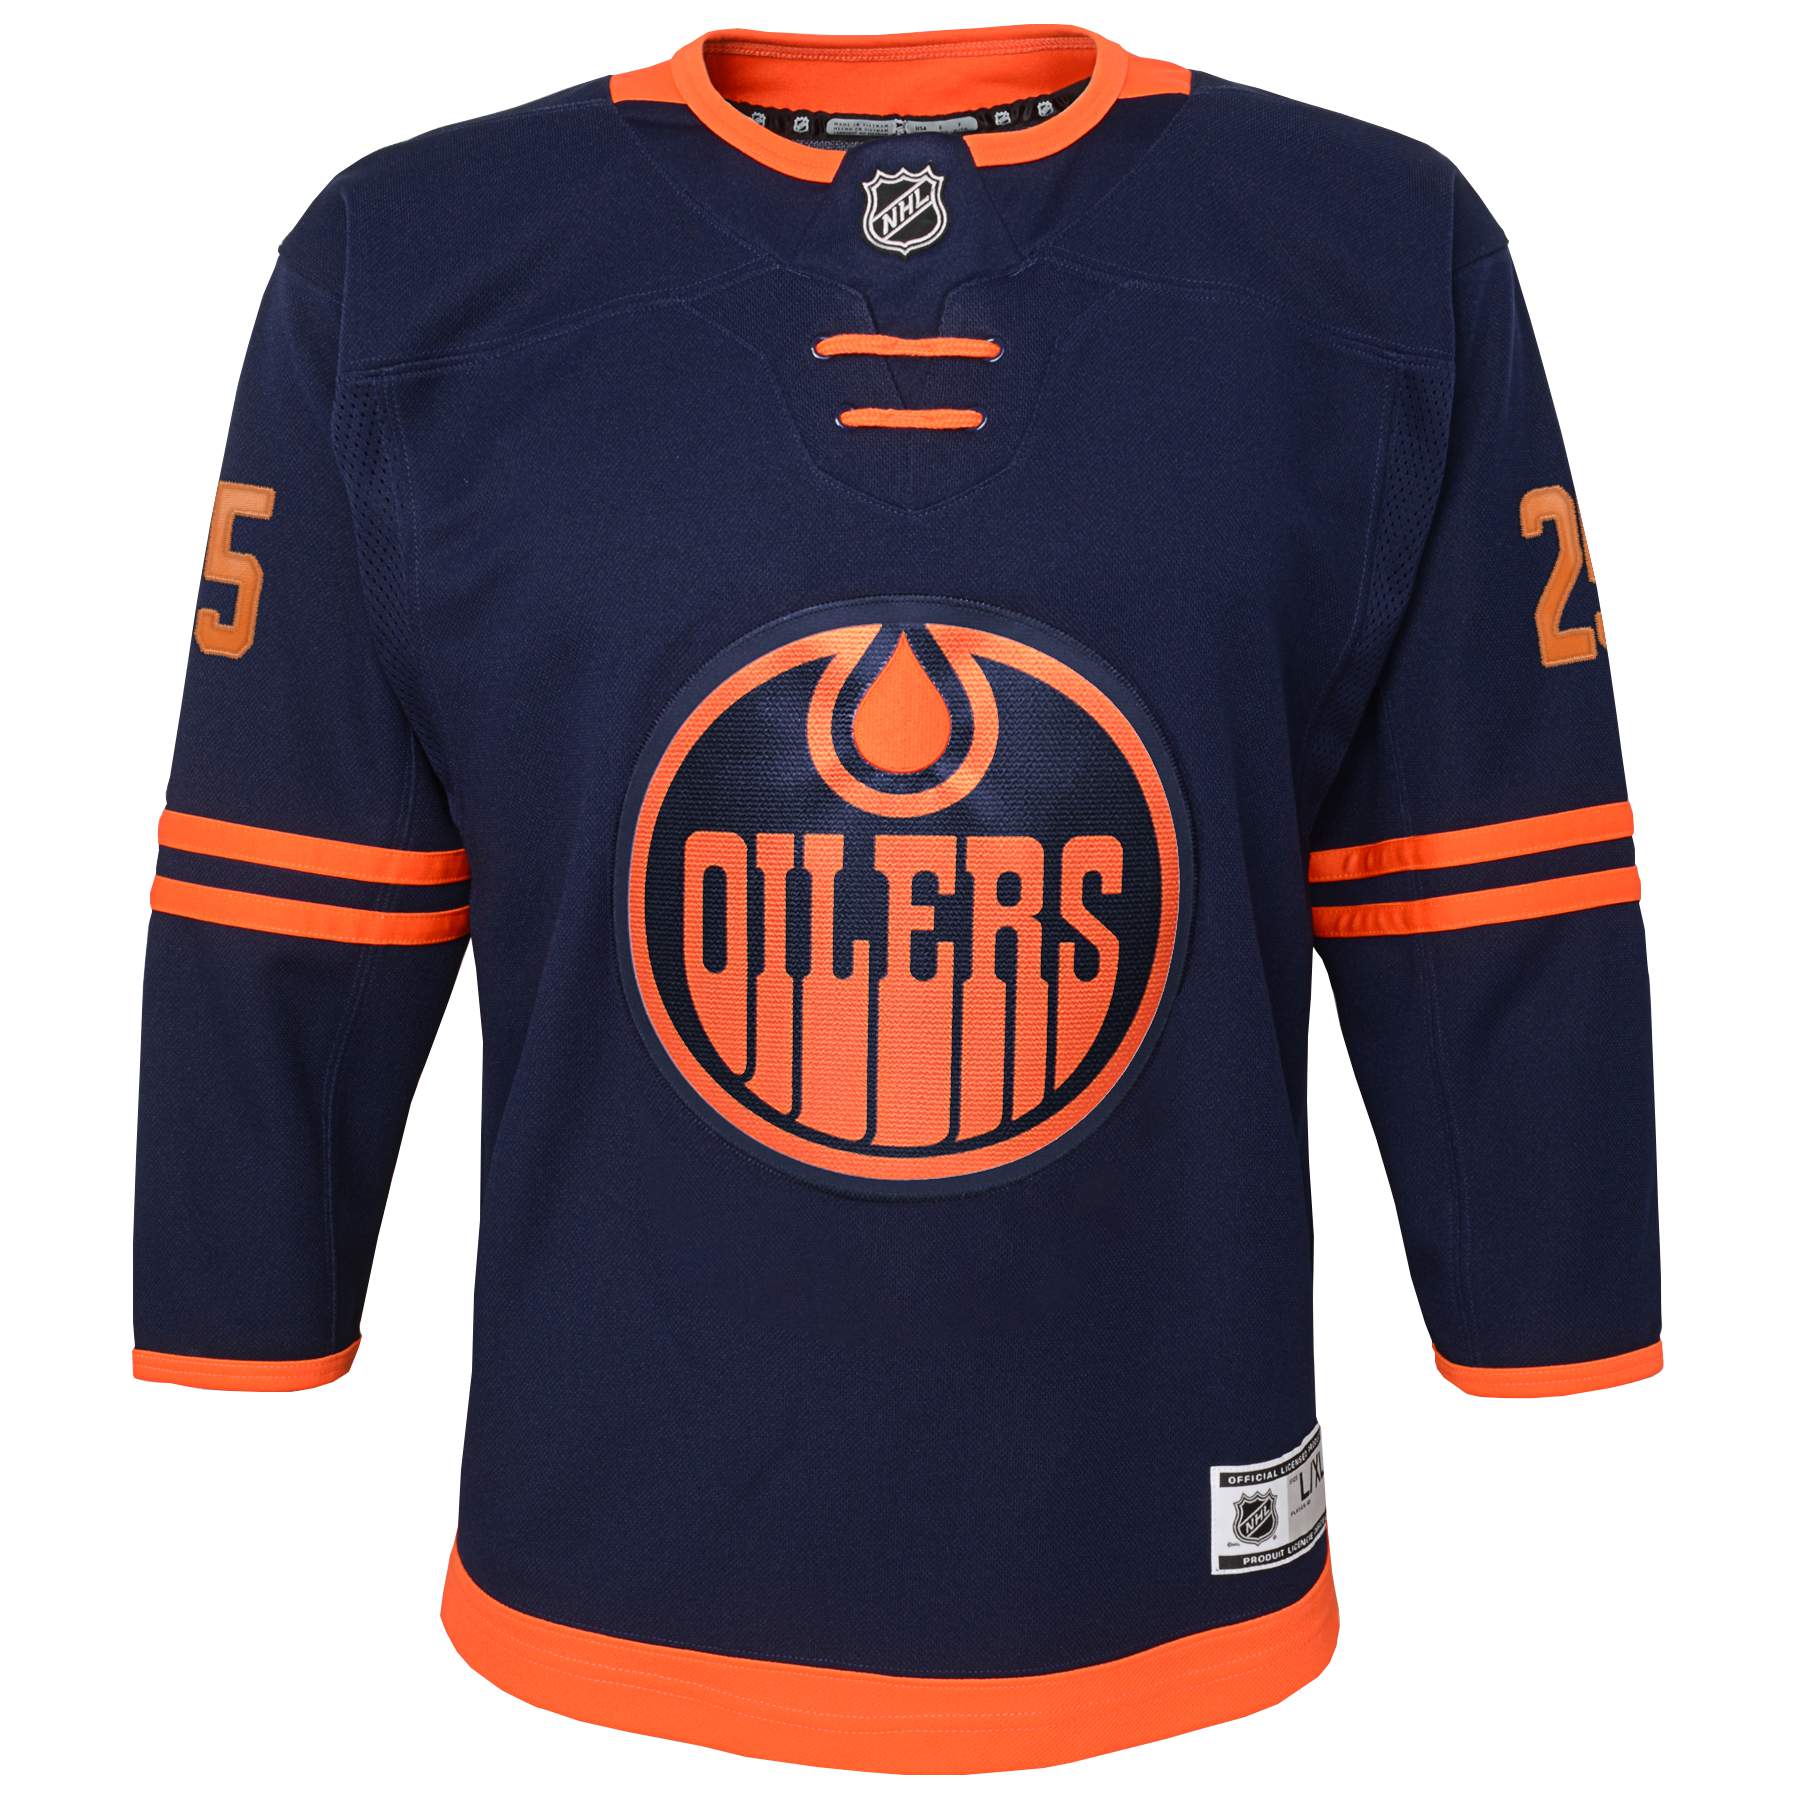 NHL Edmonton Oilers Grant Fuhr #31 Breakaway Vintage Replica Jersey